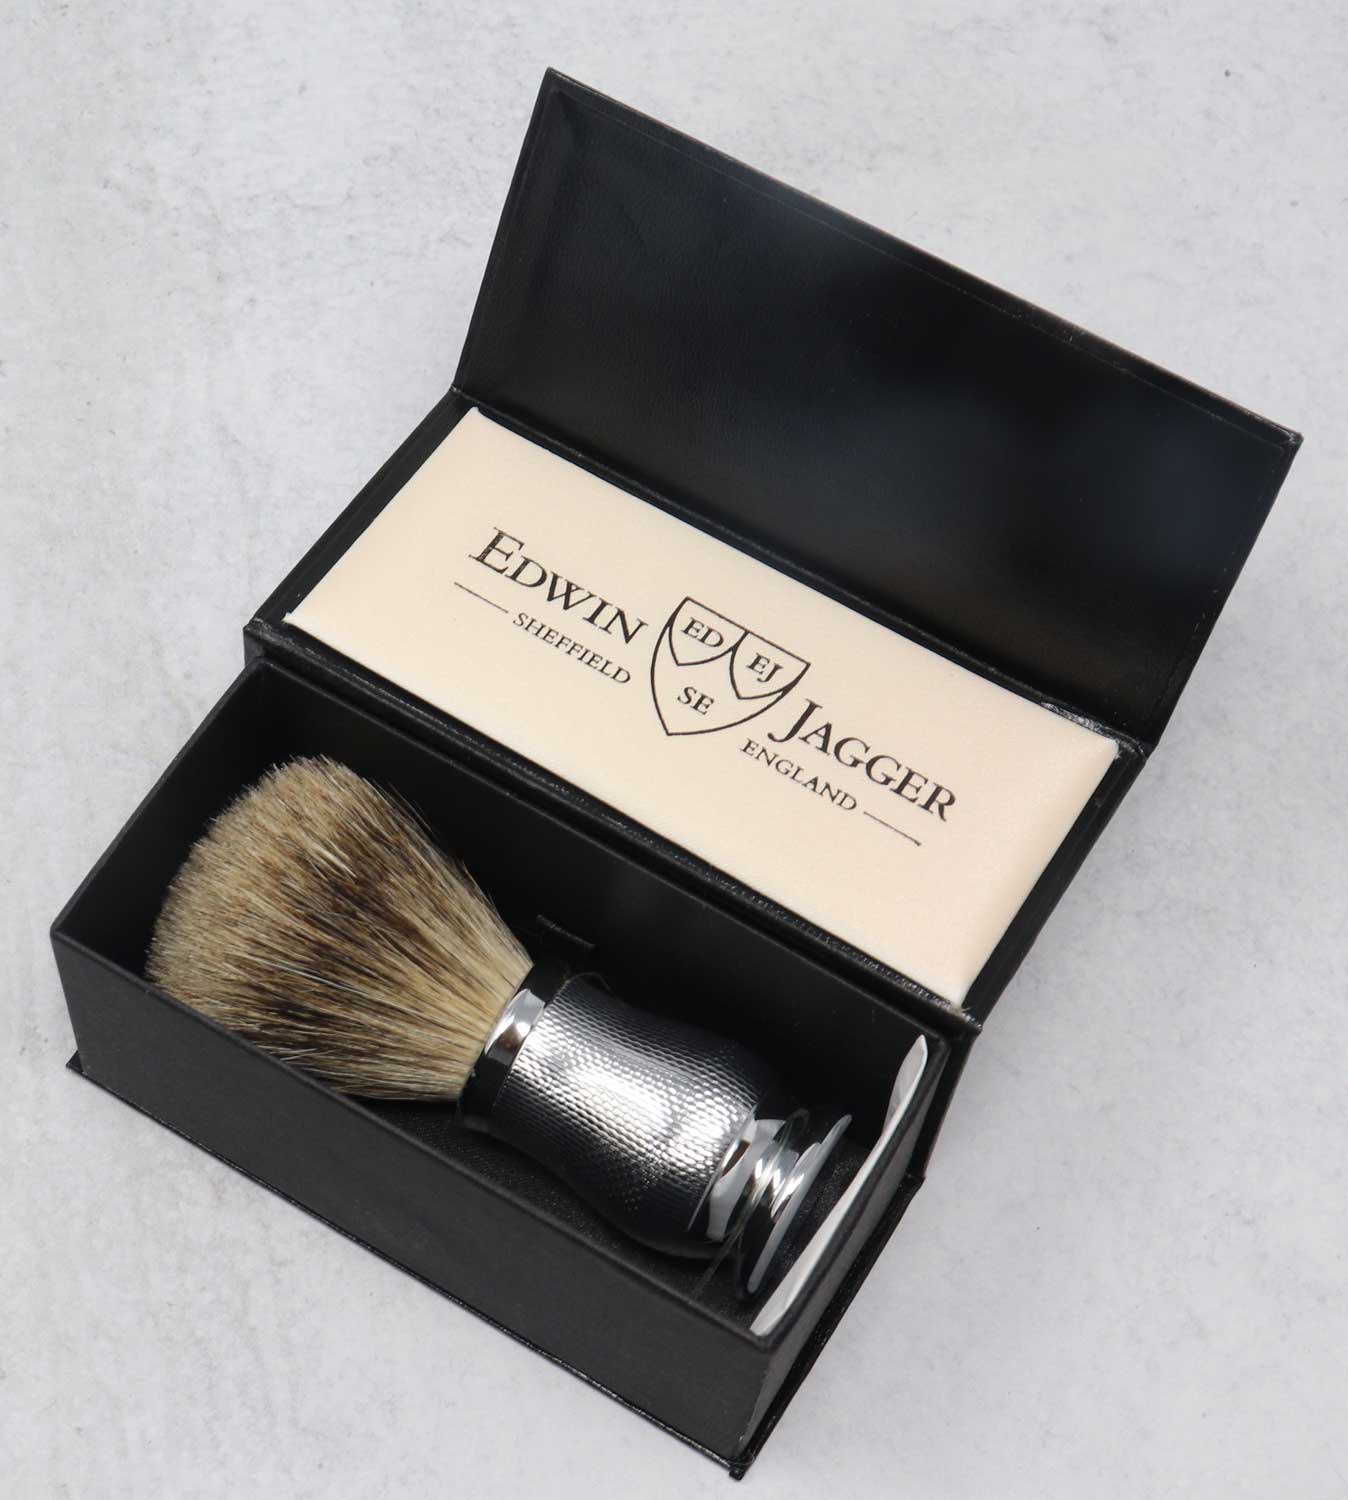 Load image into Gallery viewer, Edwin Jagger Chatsworth Chrome Barley Best Badger Shaving Brush
